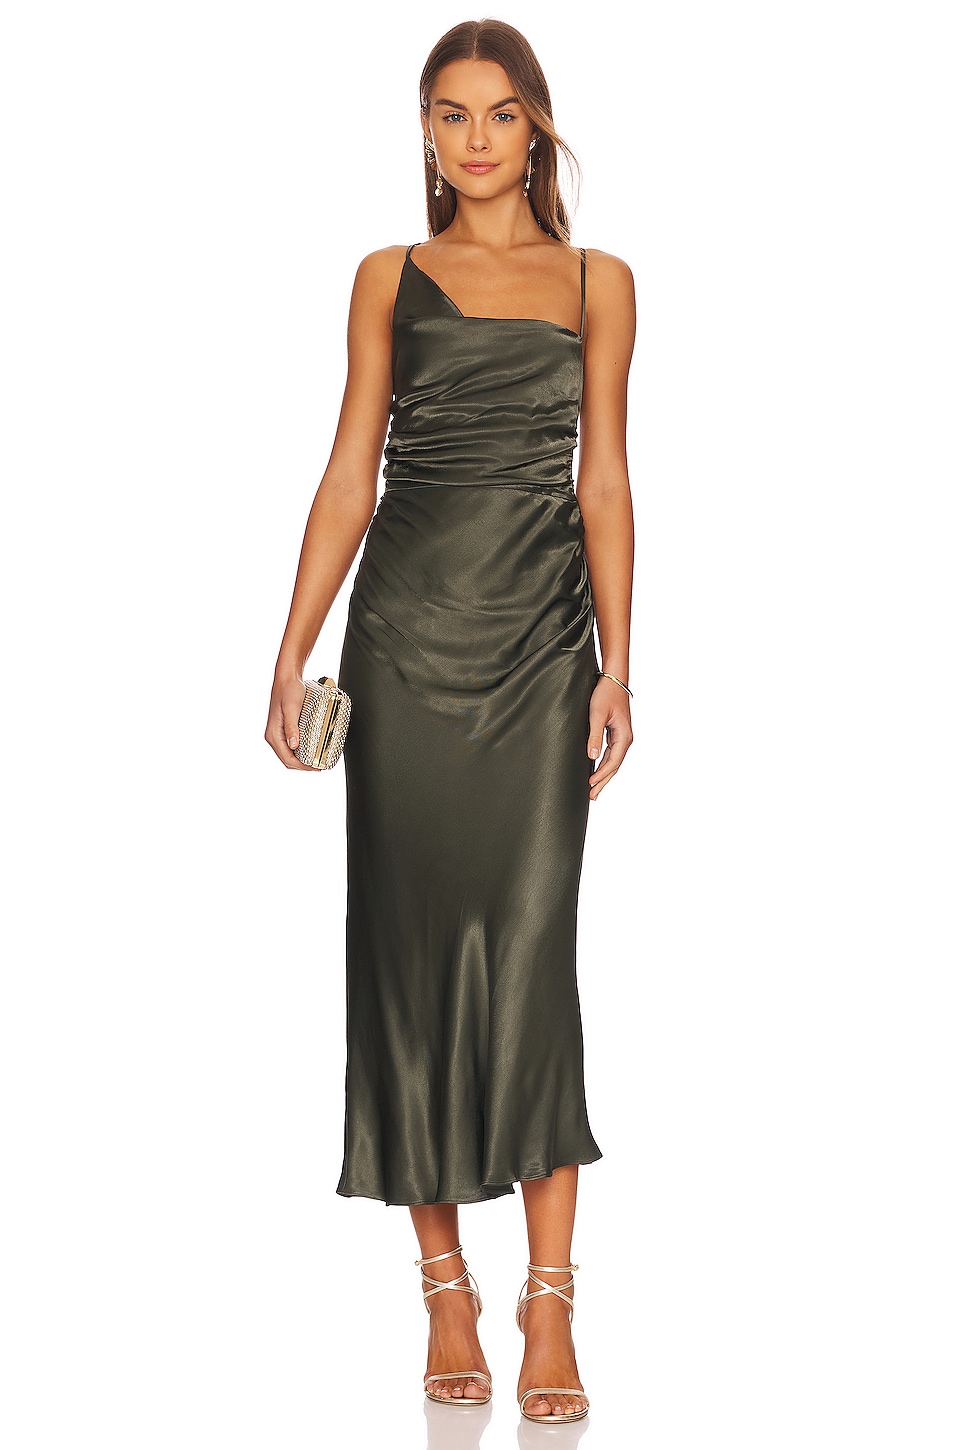 Shona Joy Green Dress, Designer Collection